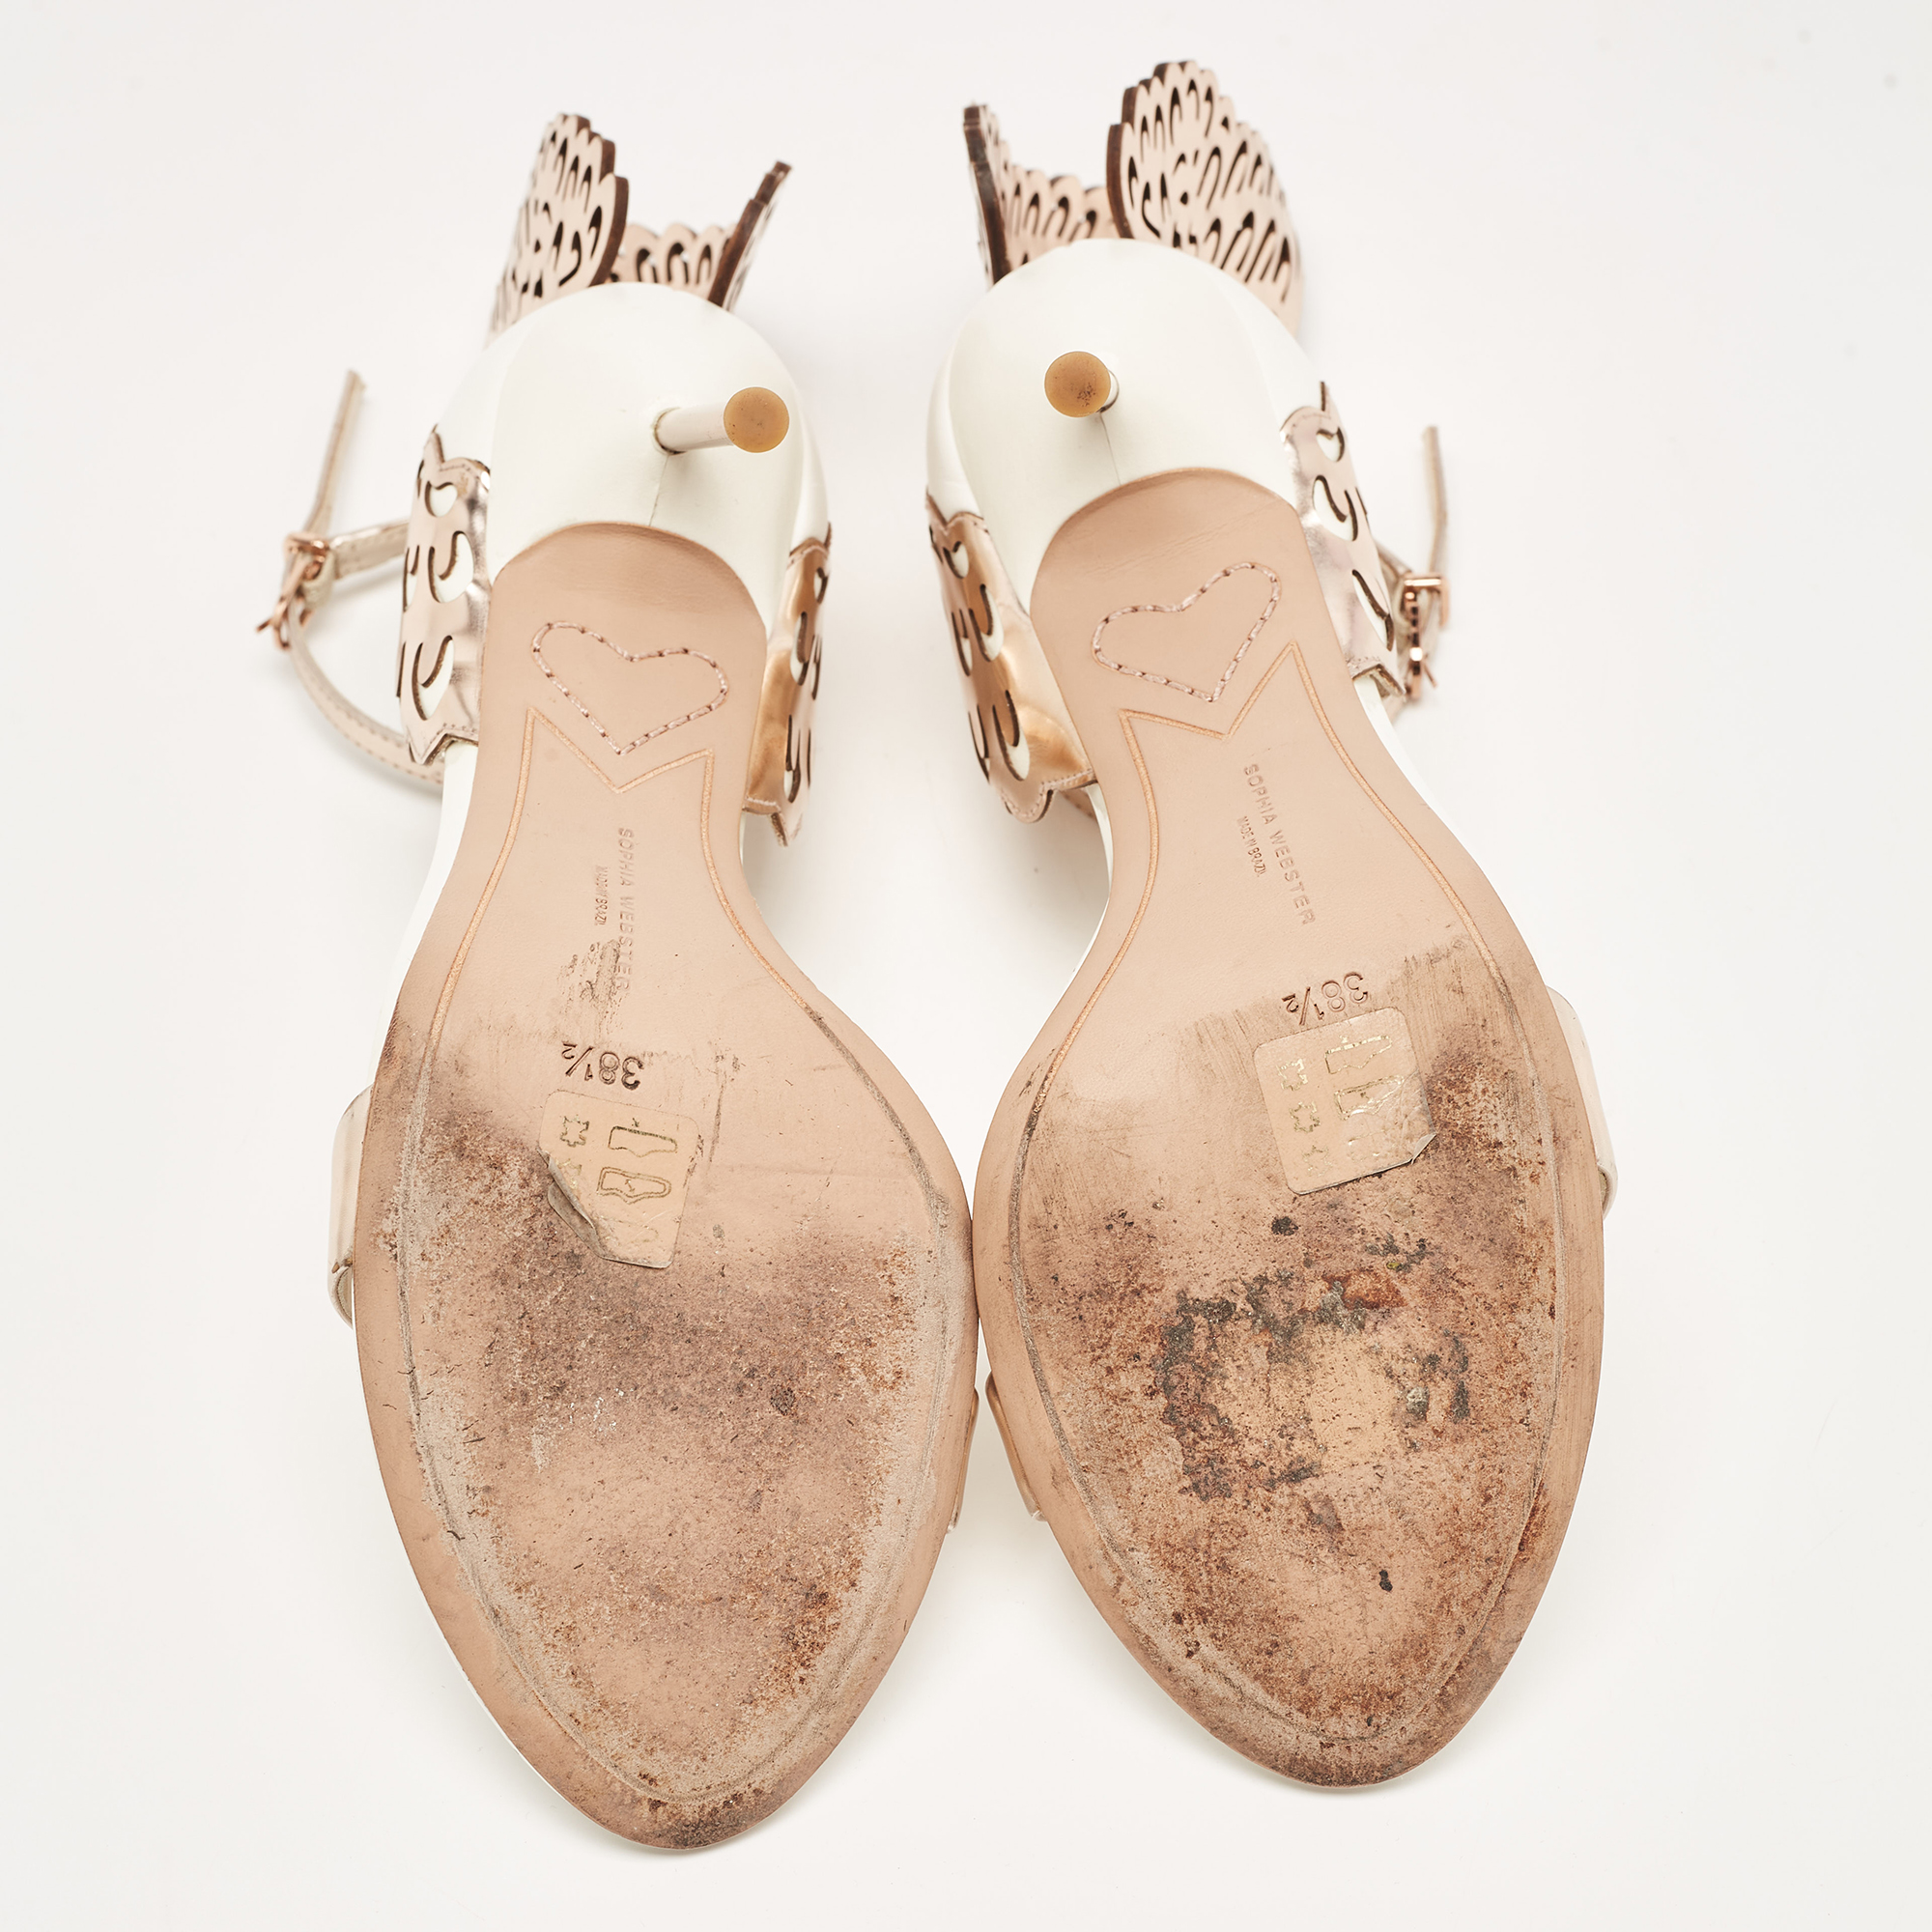 Sophia Webster White/Metallic Leather Evangeline Sandals Size 38.5